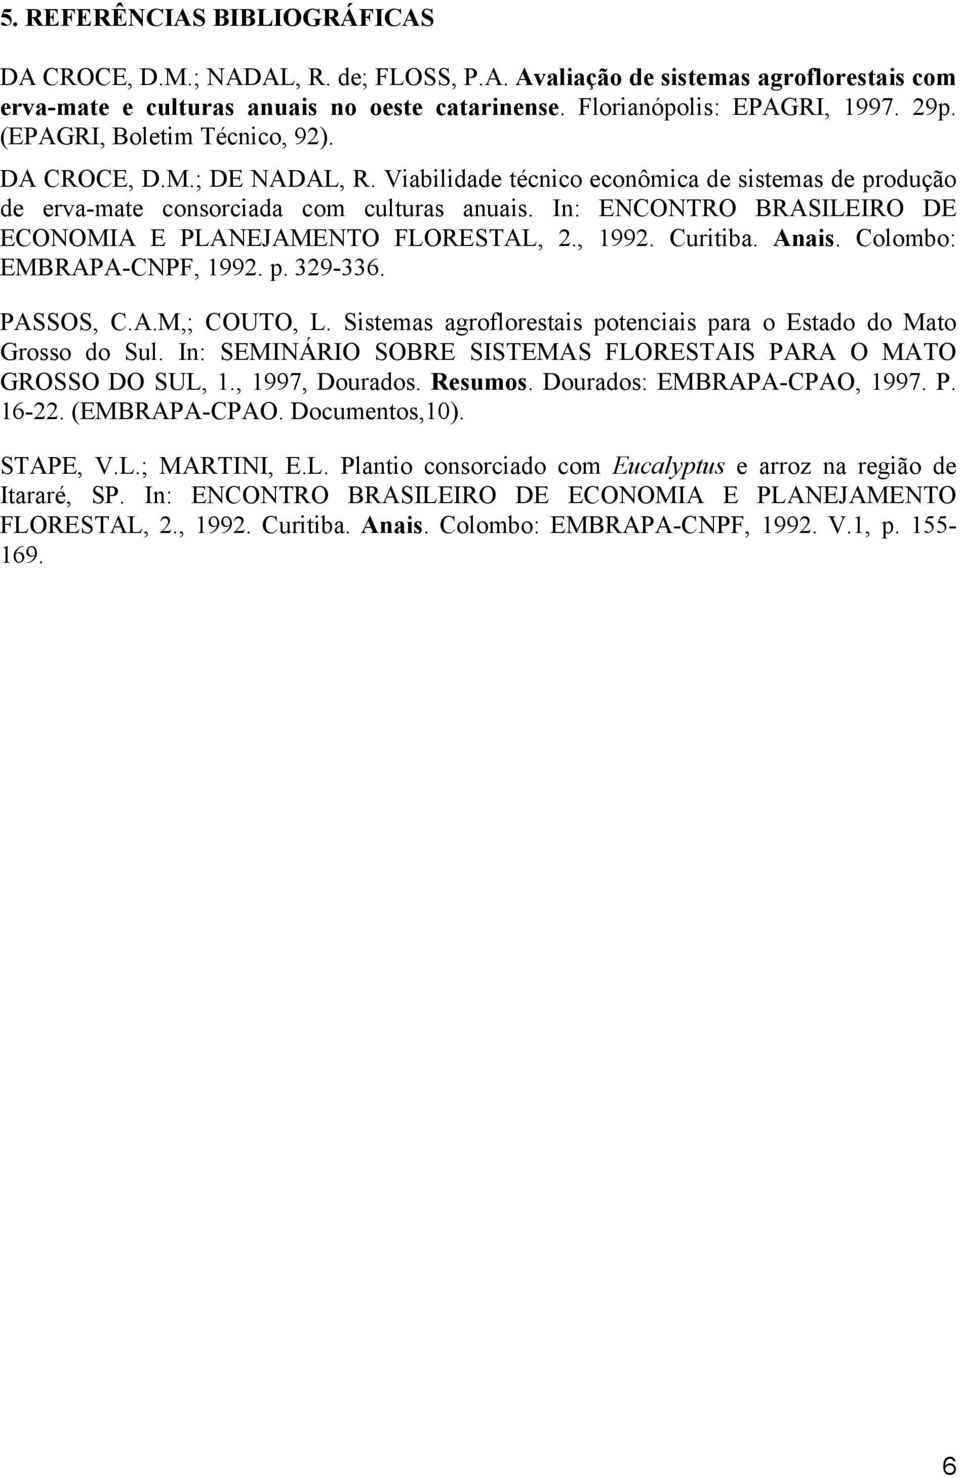 In: ENCONTRO BRASILEIRO DE ECONOMIA E PLANEJAMENTO FLORESTAL, 2., 1992. Curitiba. Anais. Colombo: EMBRAPA-CNPF, 1992. p. 329-336. PASSOS, C.A.M,; COUTO, L.